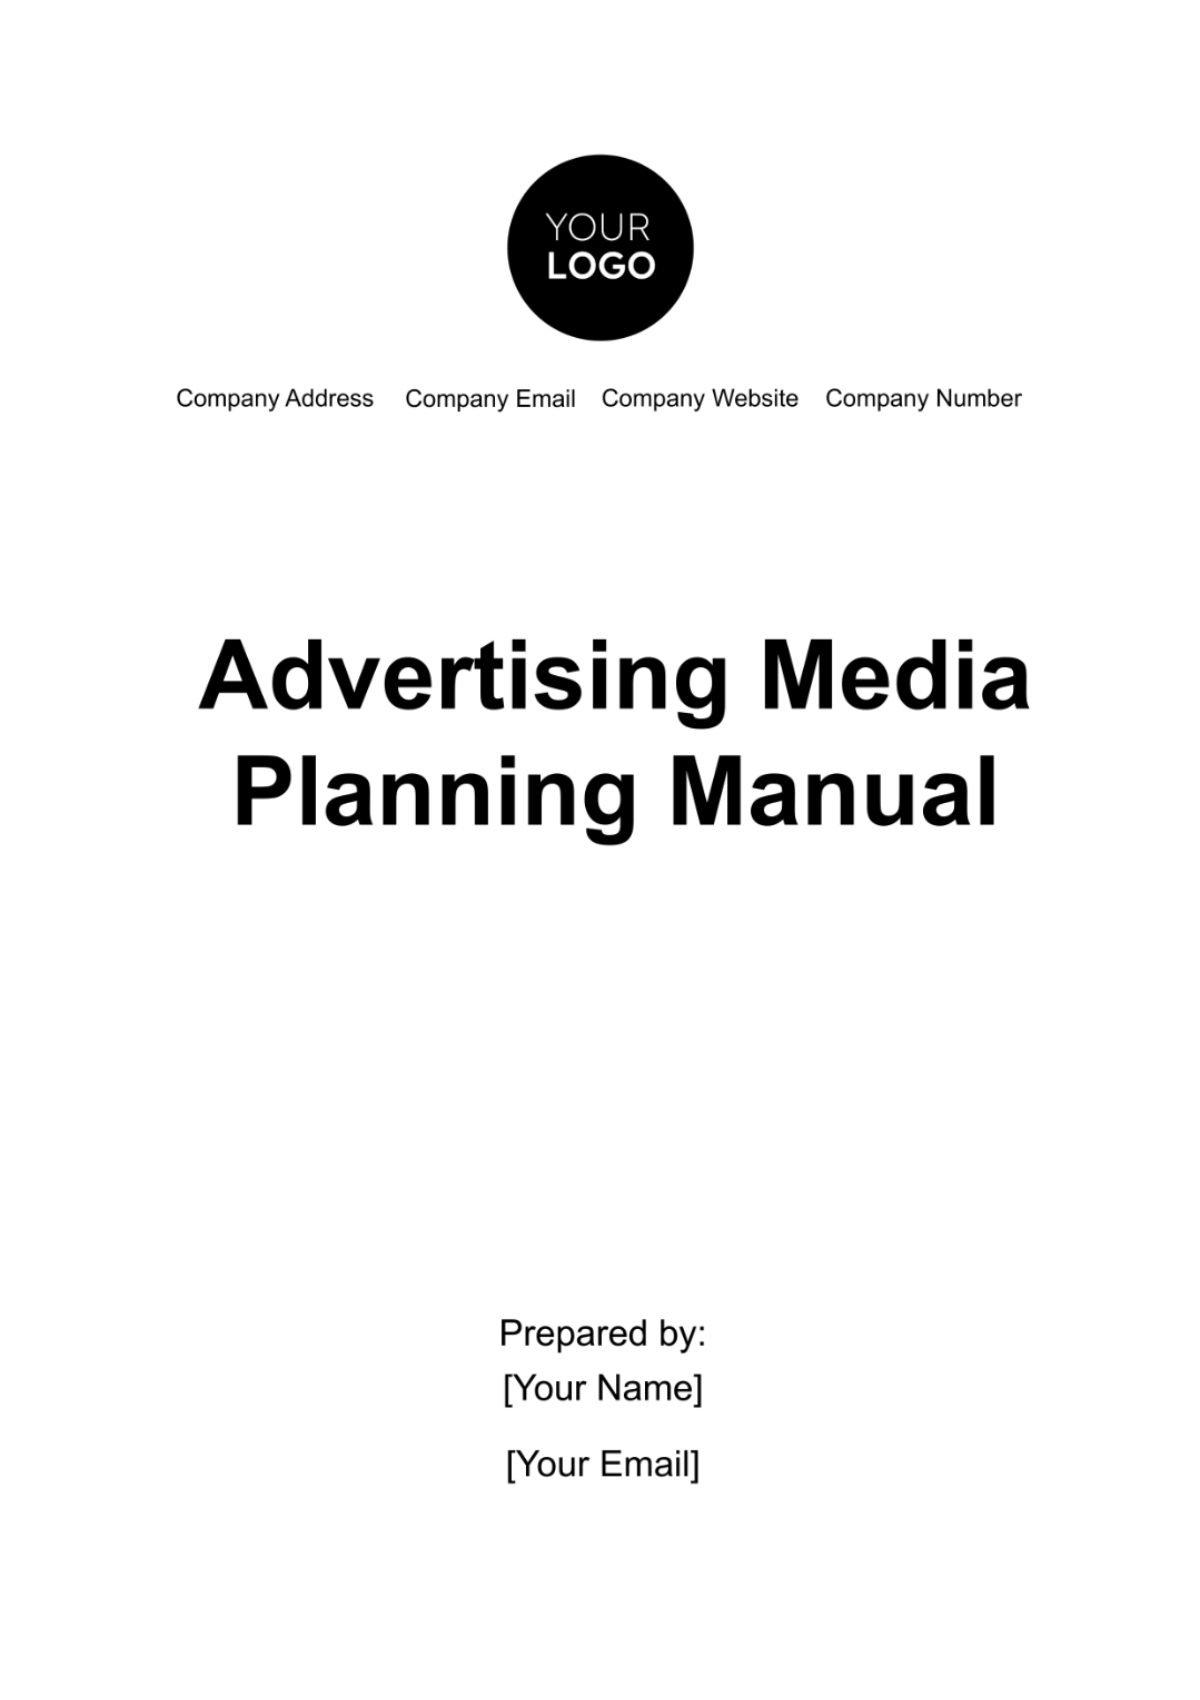 Advertising Media Planning Manual Template